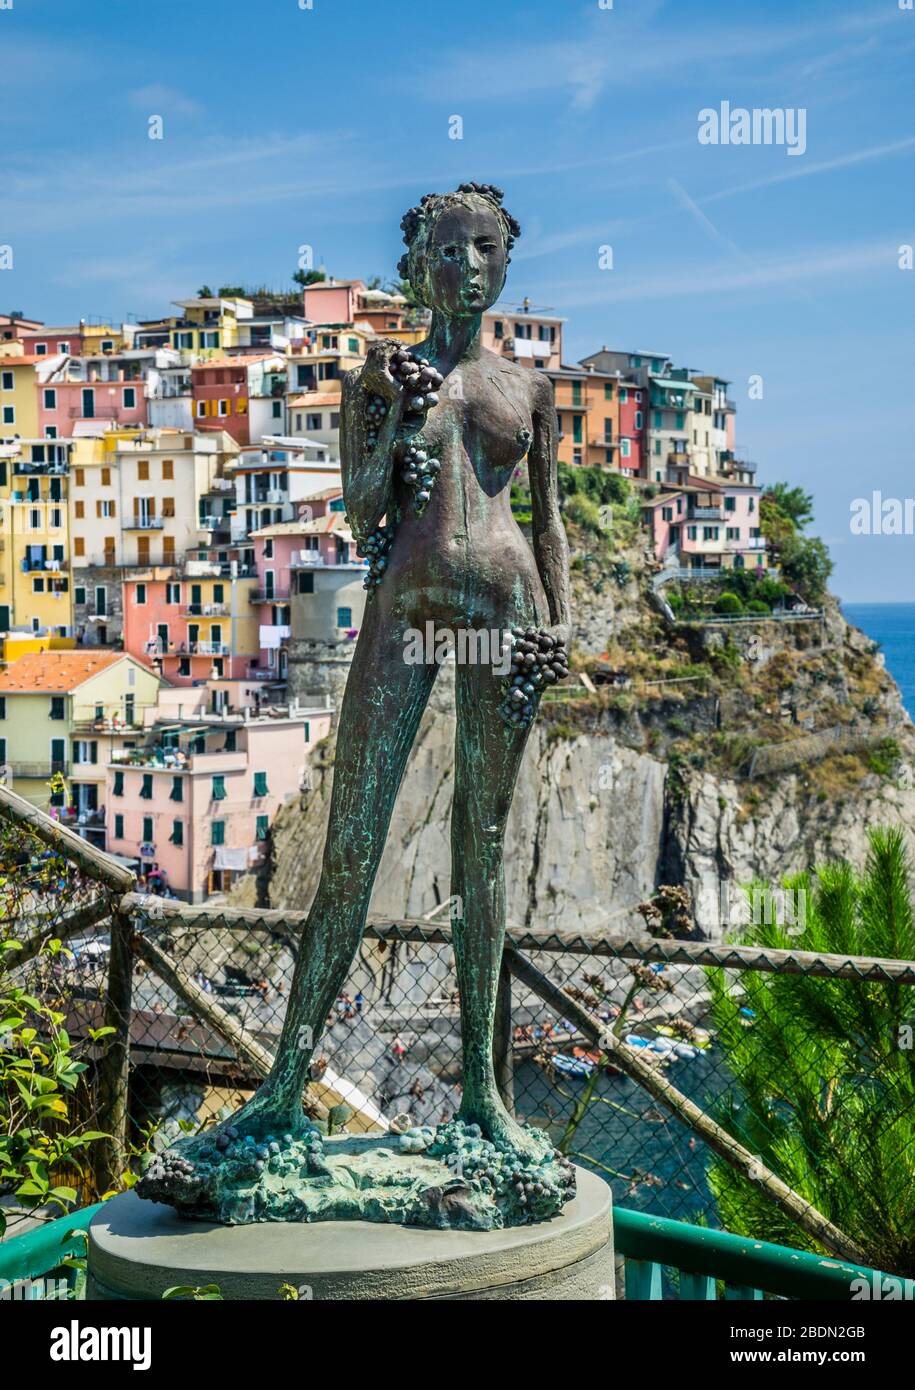 Statue de la femme du raisin de Manarola par Antonio Pujia à Punta Bonfiglio, Manarola, Cinque Terre, Ligurie, Italie Banque D'Images